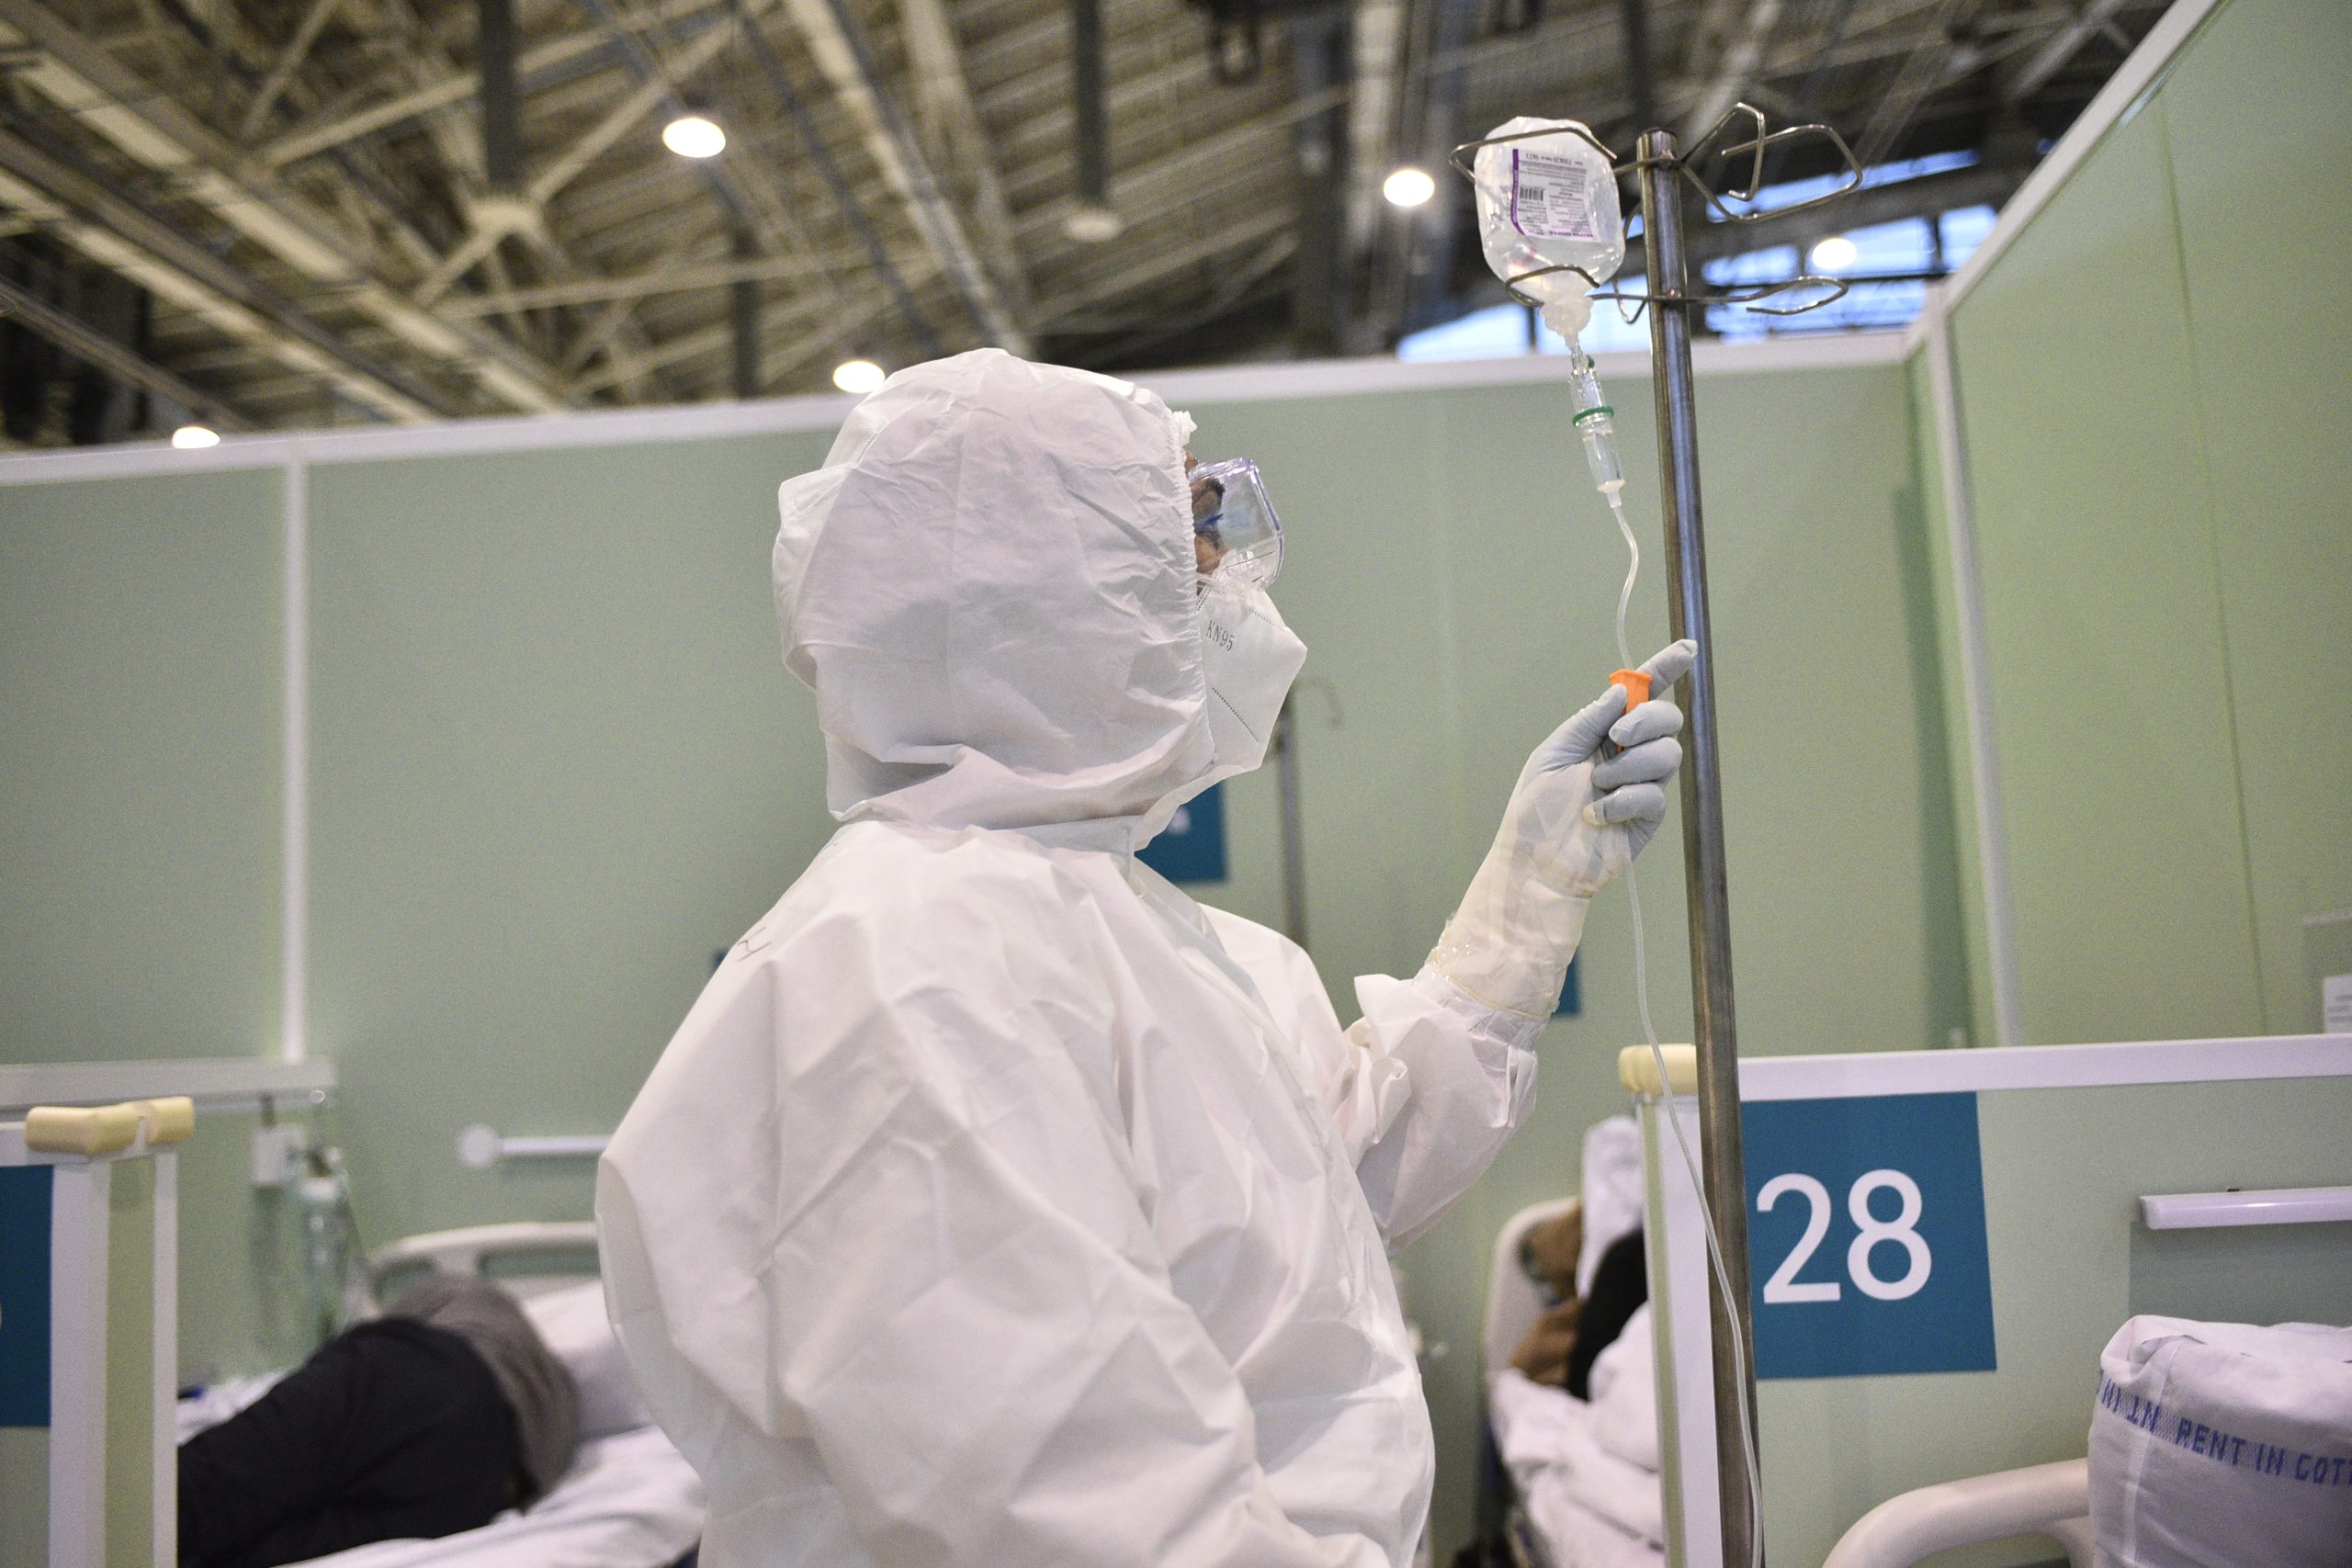 Оперштаб: 1,1 тысячи человек с коронавирусом госпитализировали за сутки в России